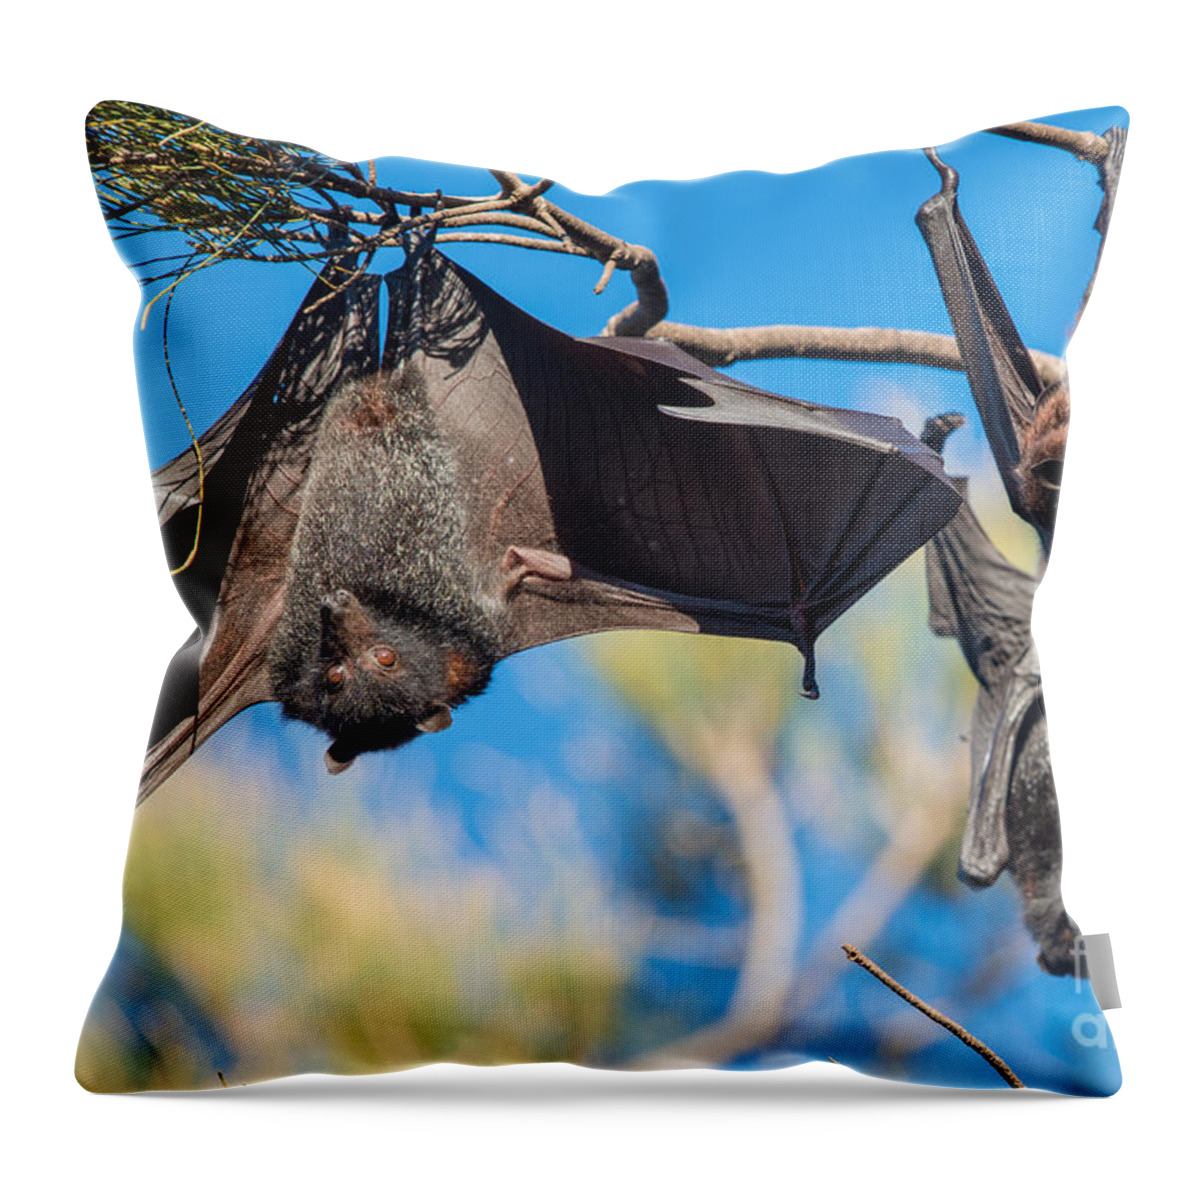 Black Flying Fox Throw Pillow featuring the photograph Black Flying Fox Bats by B.G. Thomson